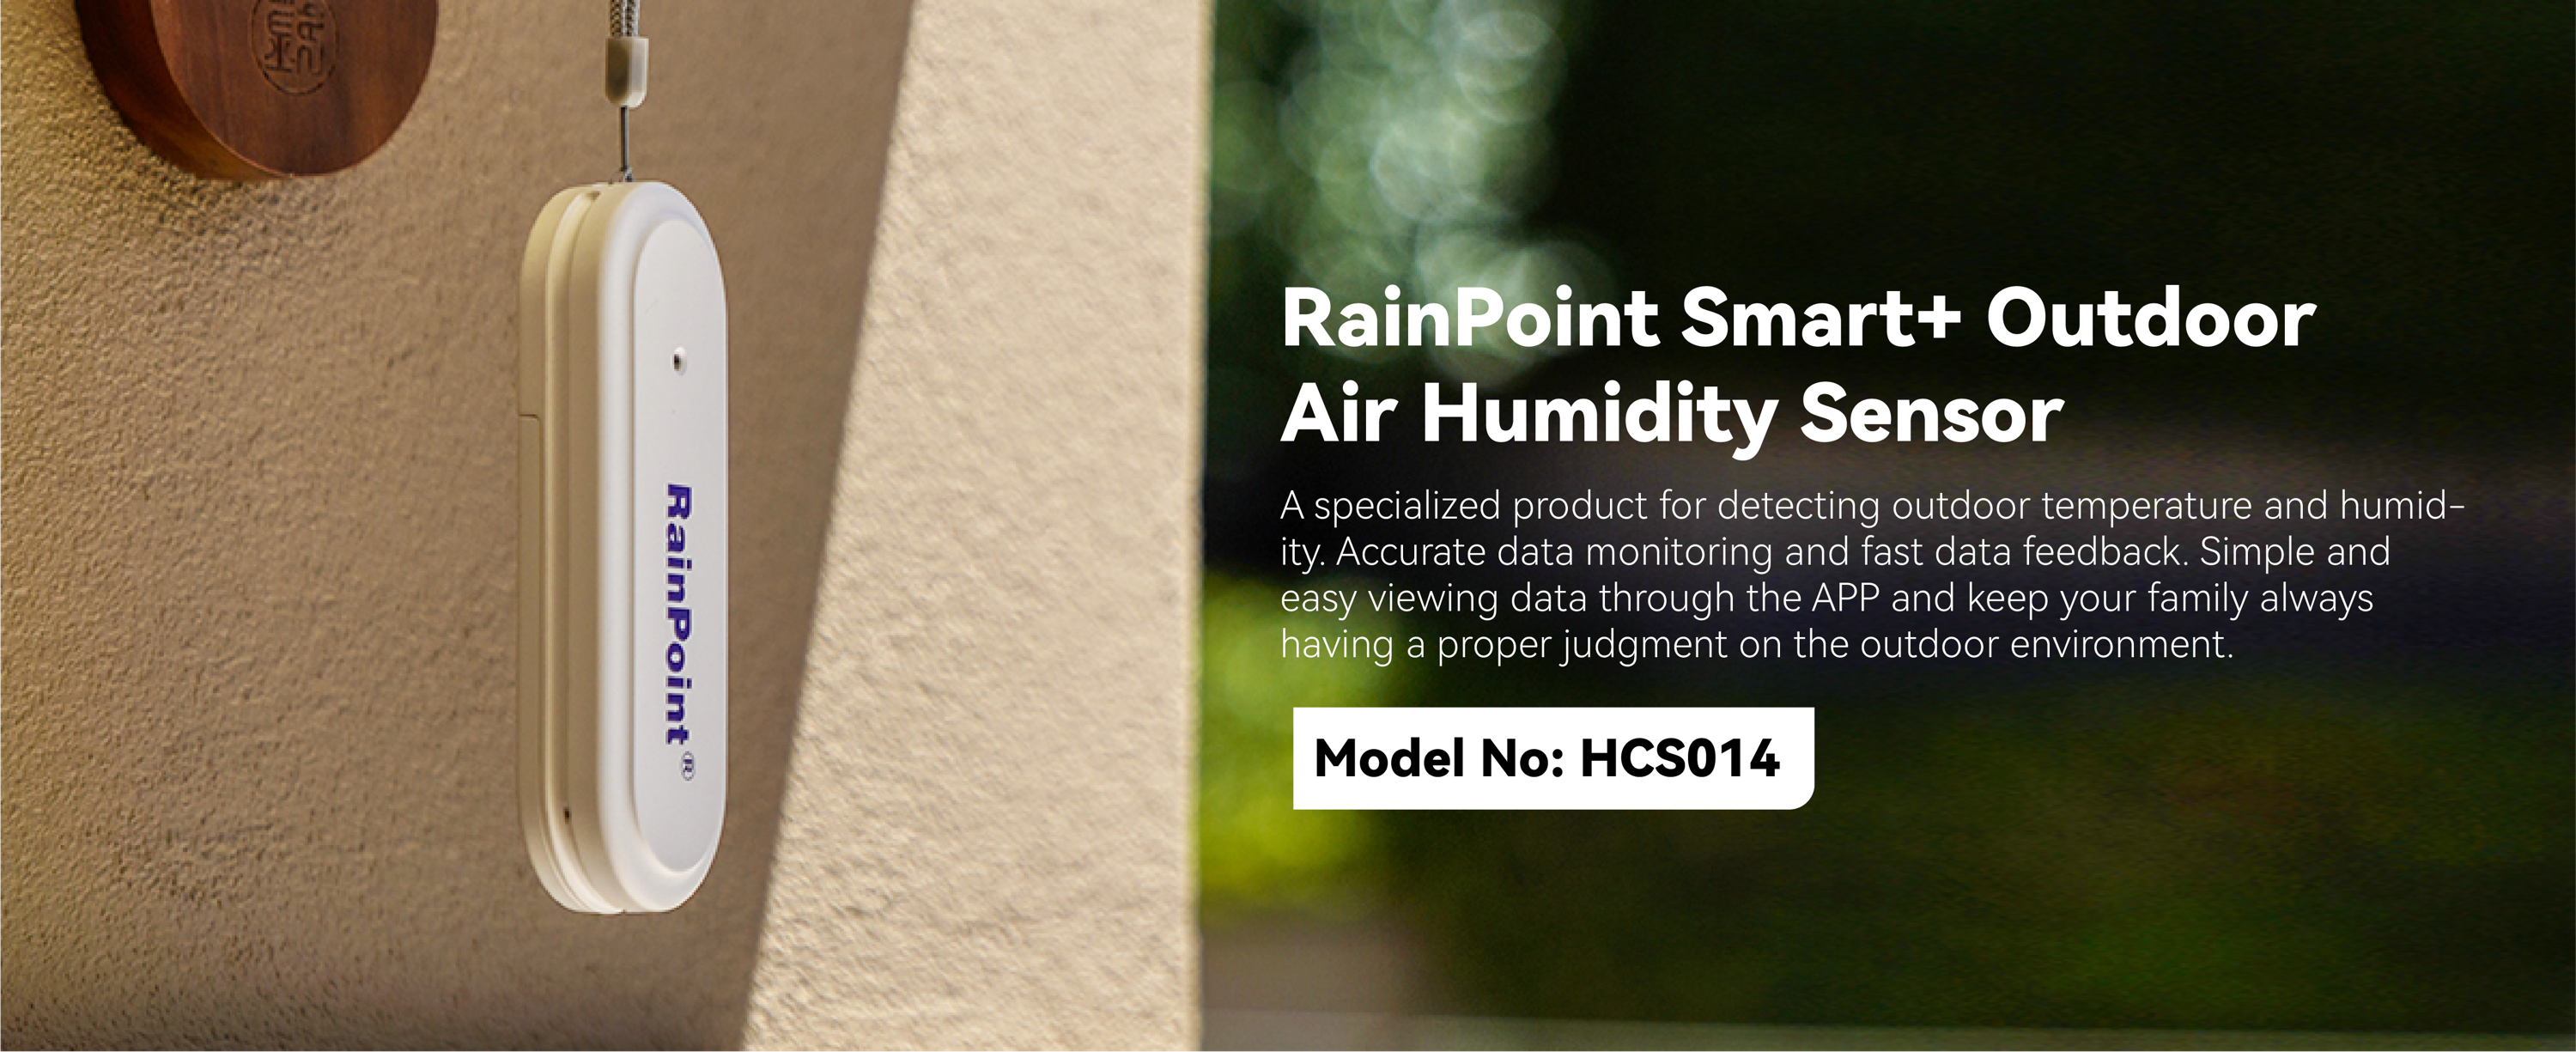 RainPoint Smart+ OutdoorAir Humidity Sensor